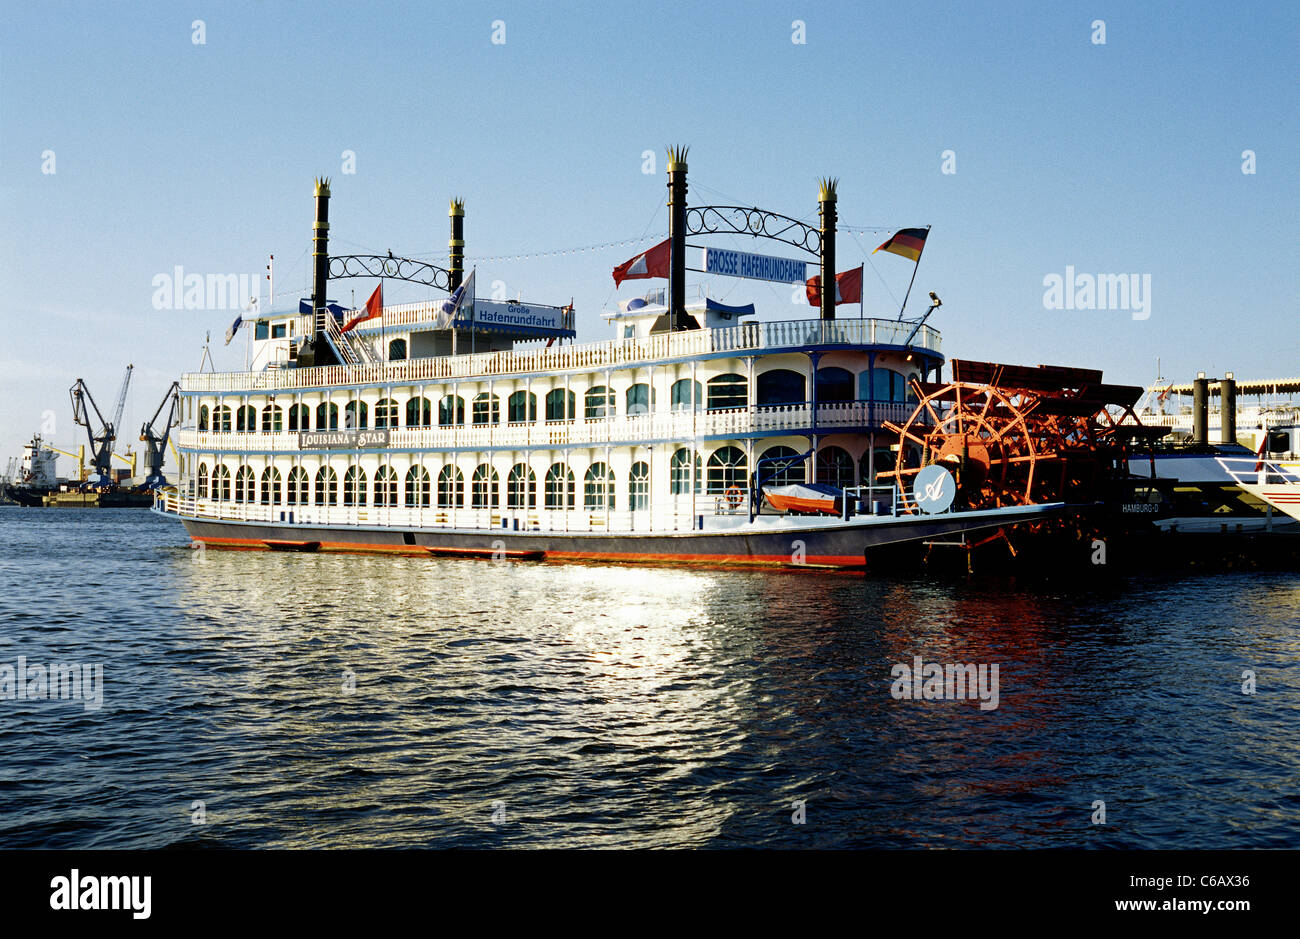 Sternwheeler Louisiana Star in the port of Hamburg. Stock Photo